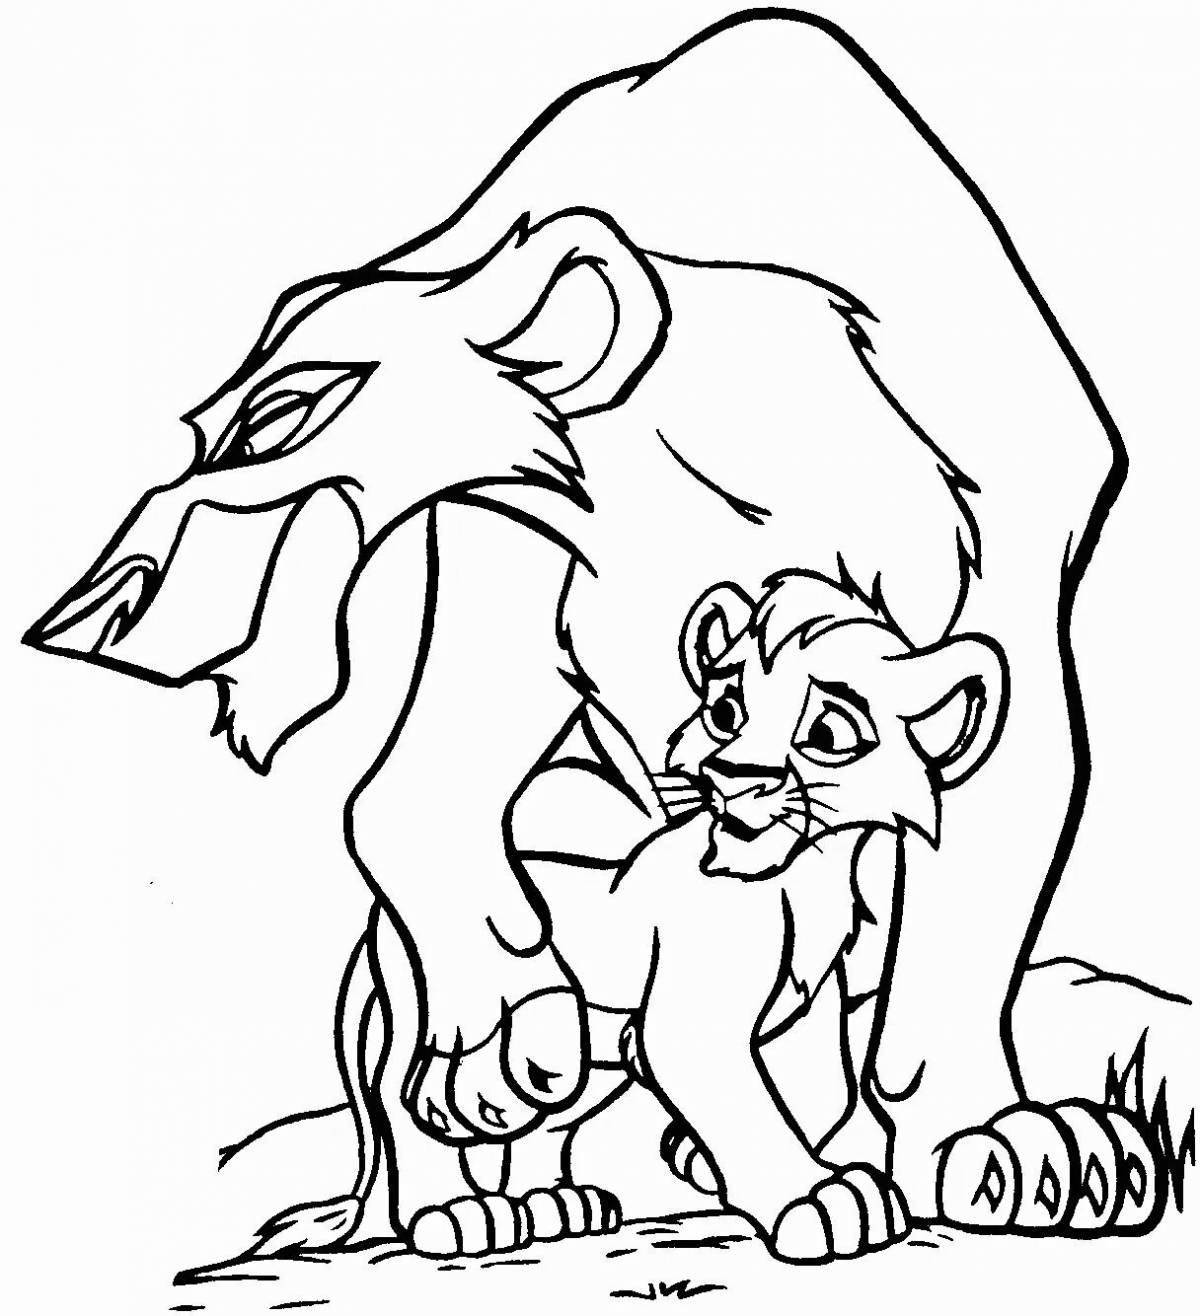 Loving Simba and Nala coloring page